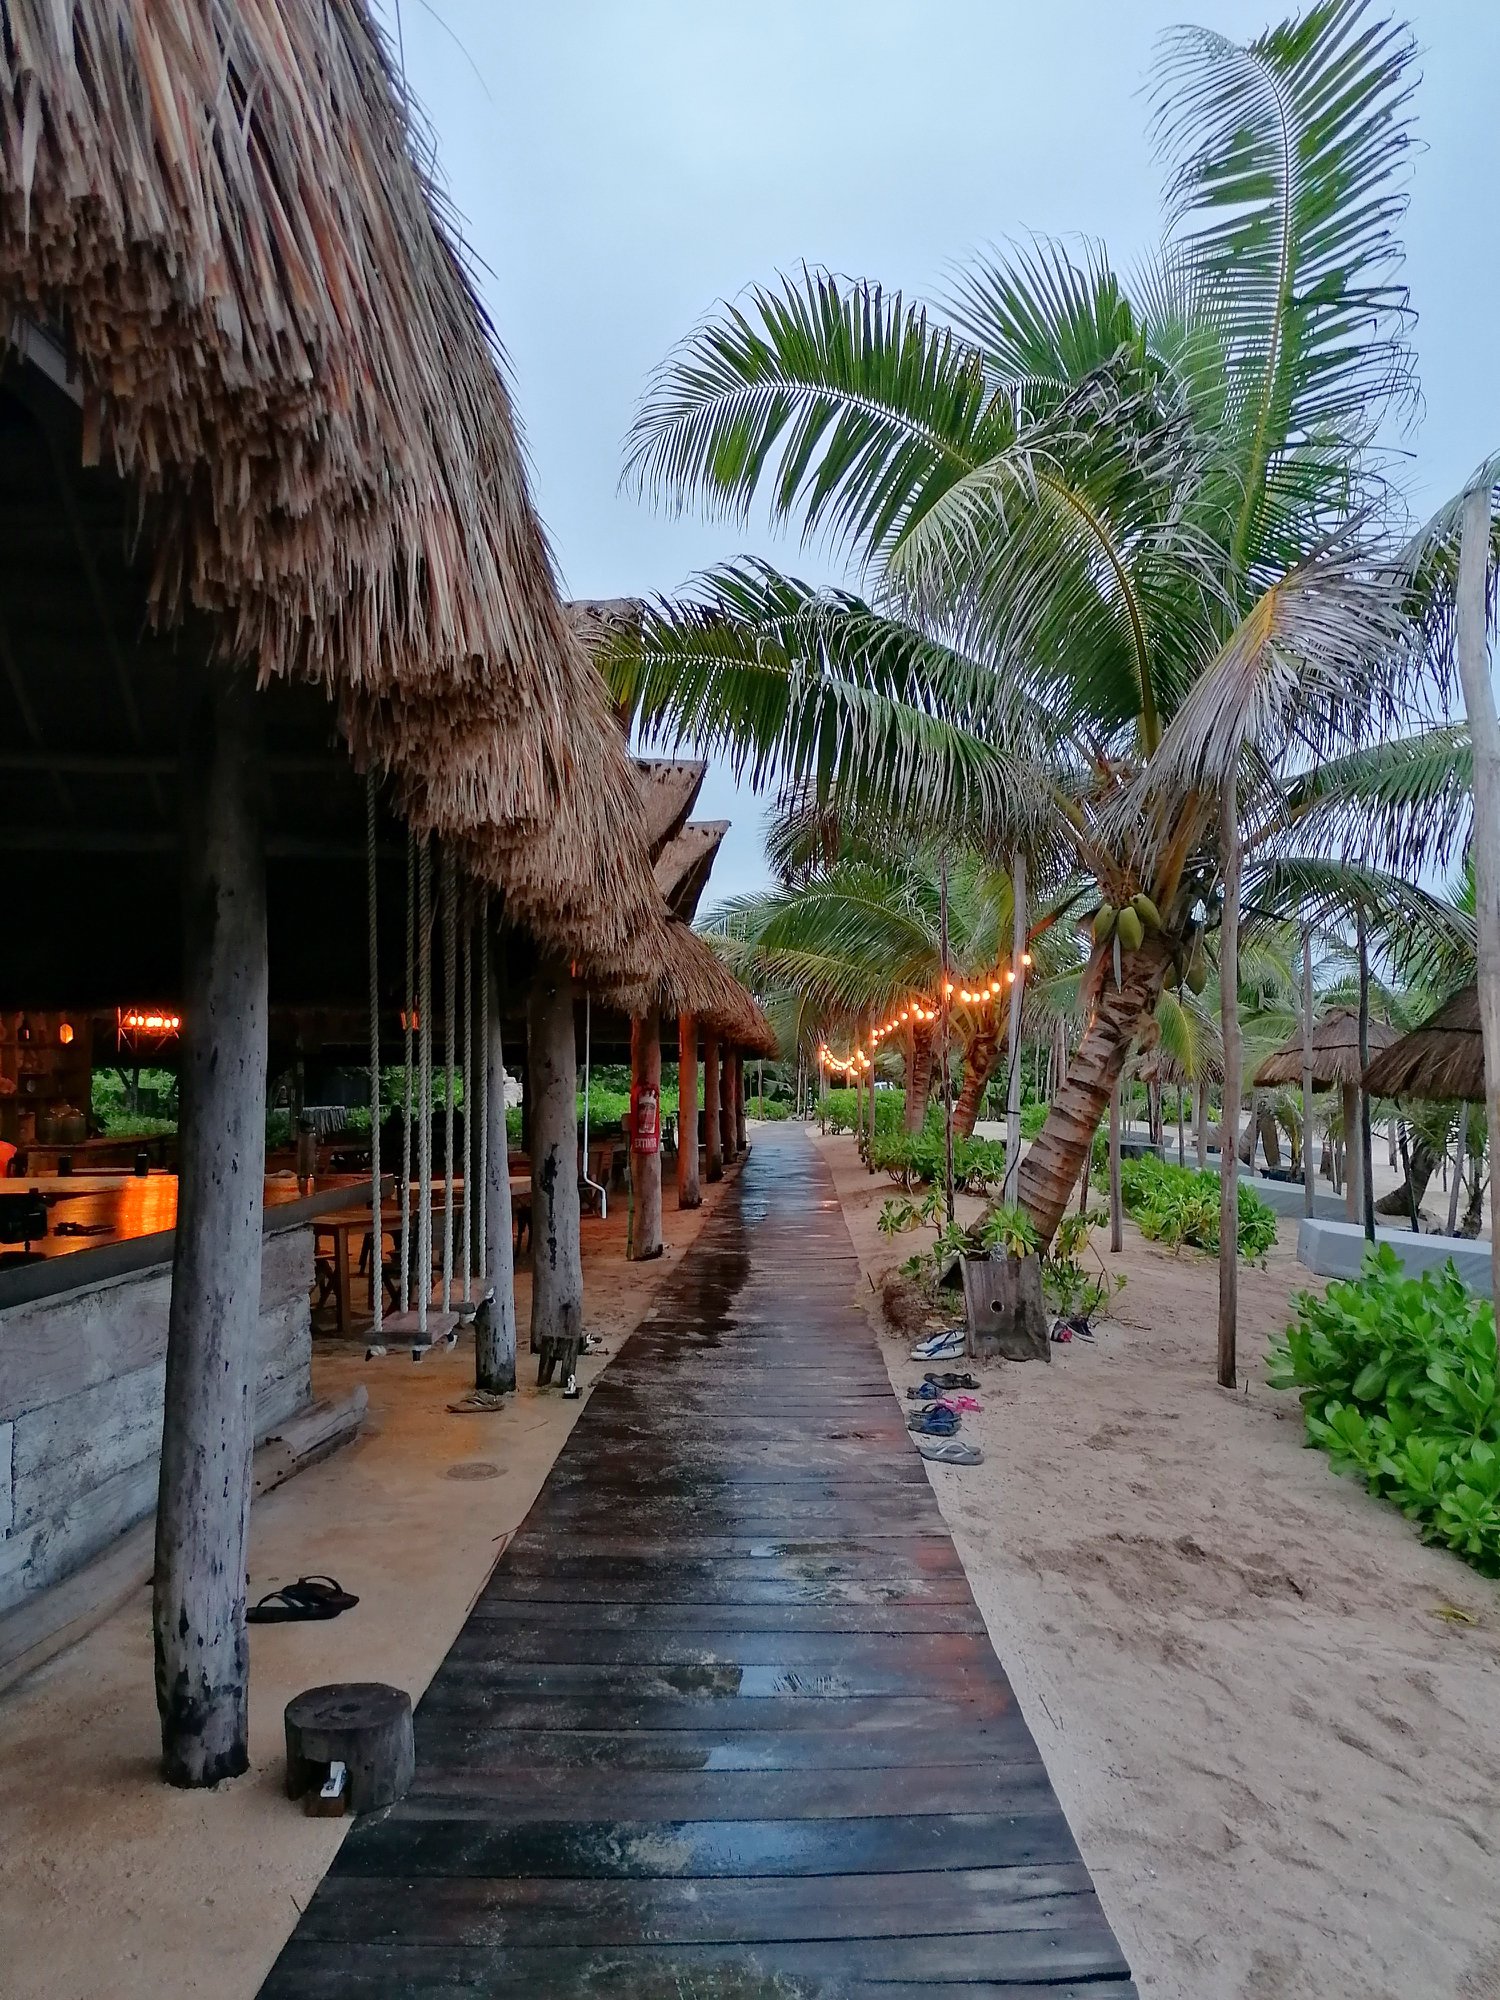 Punta Venado – Exclusive Beach Club in Playa del Carmen near Cancun